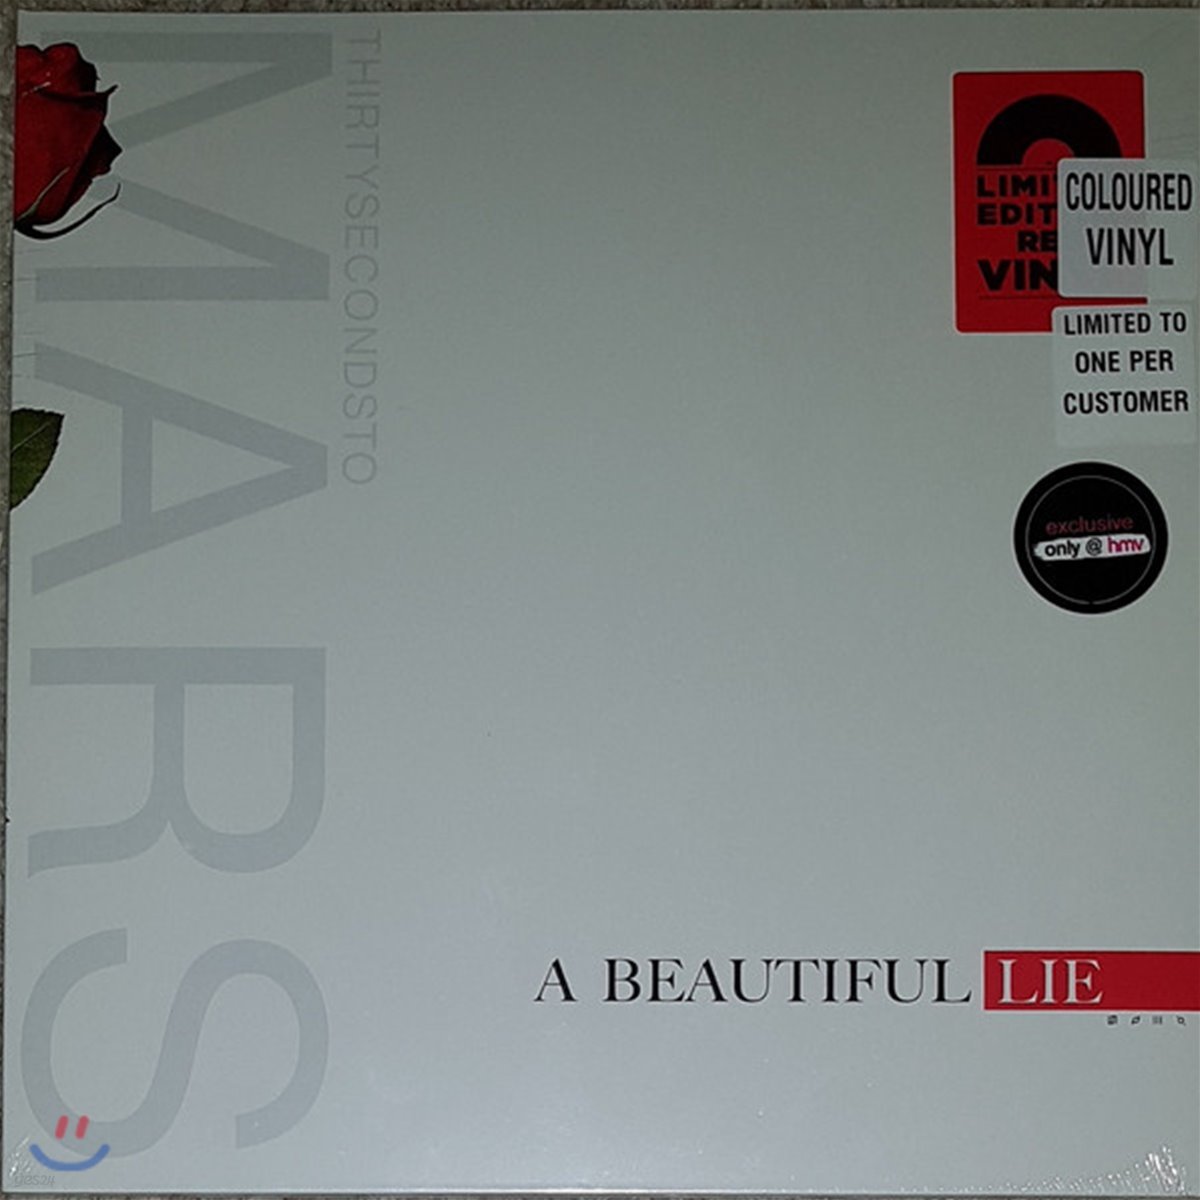 30 Seconds To Mars (써티 세컨즈 투 마스) - A Beautiful Lie [레드 컬러 LP]